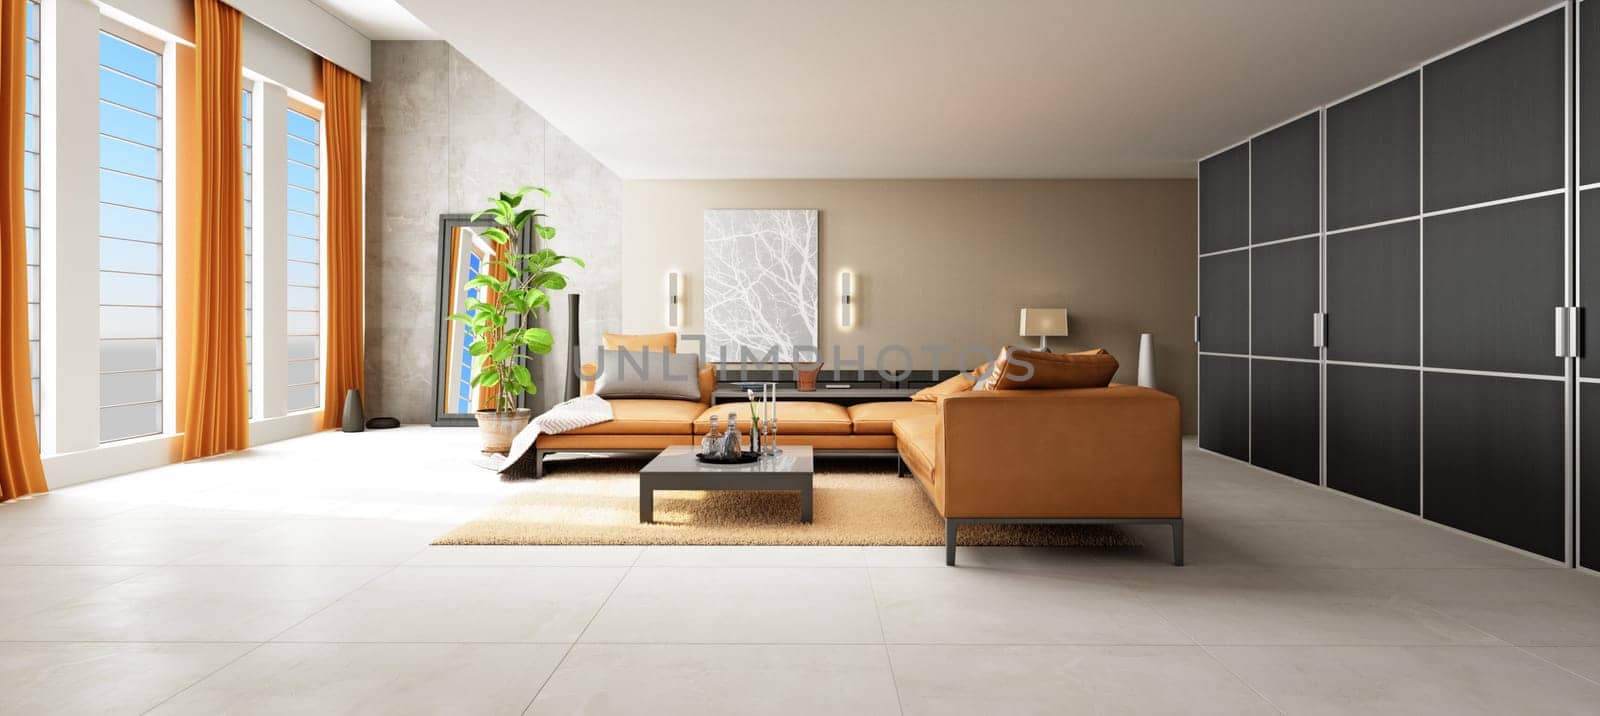 3D illustration of a modern apartment interior.